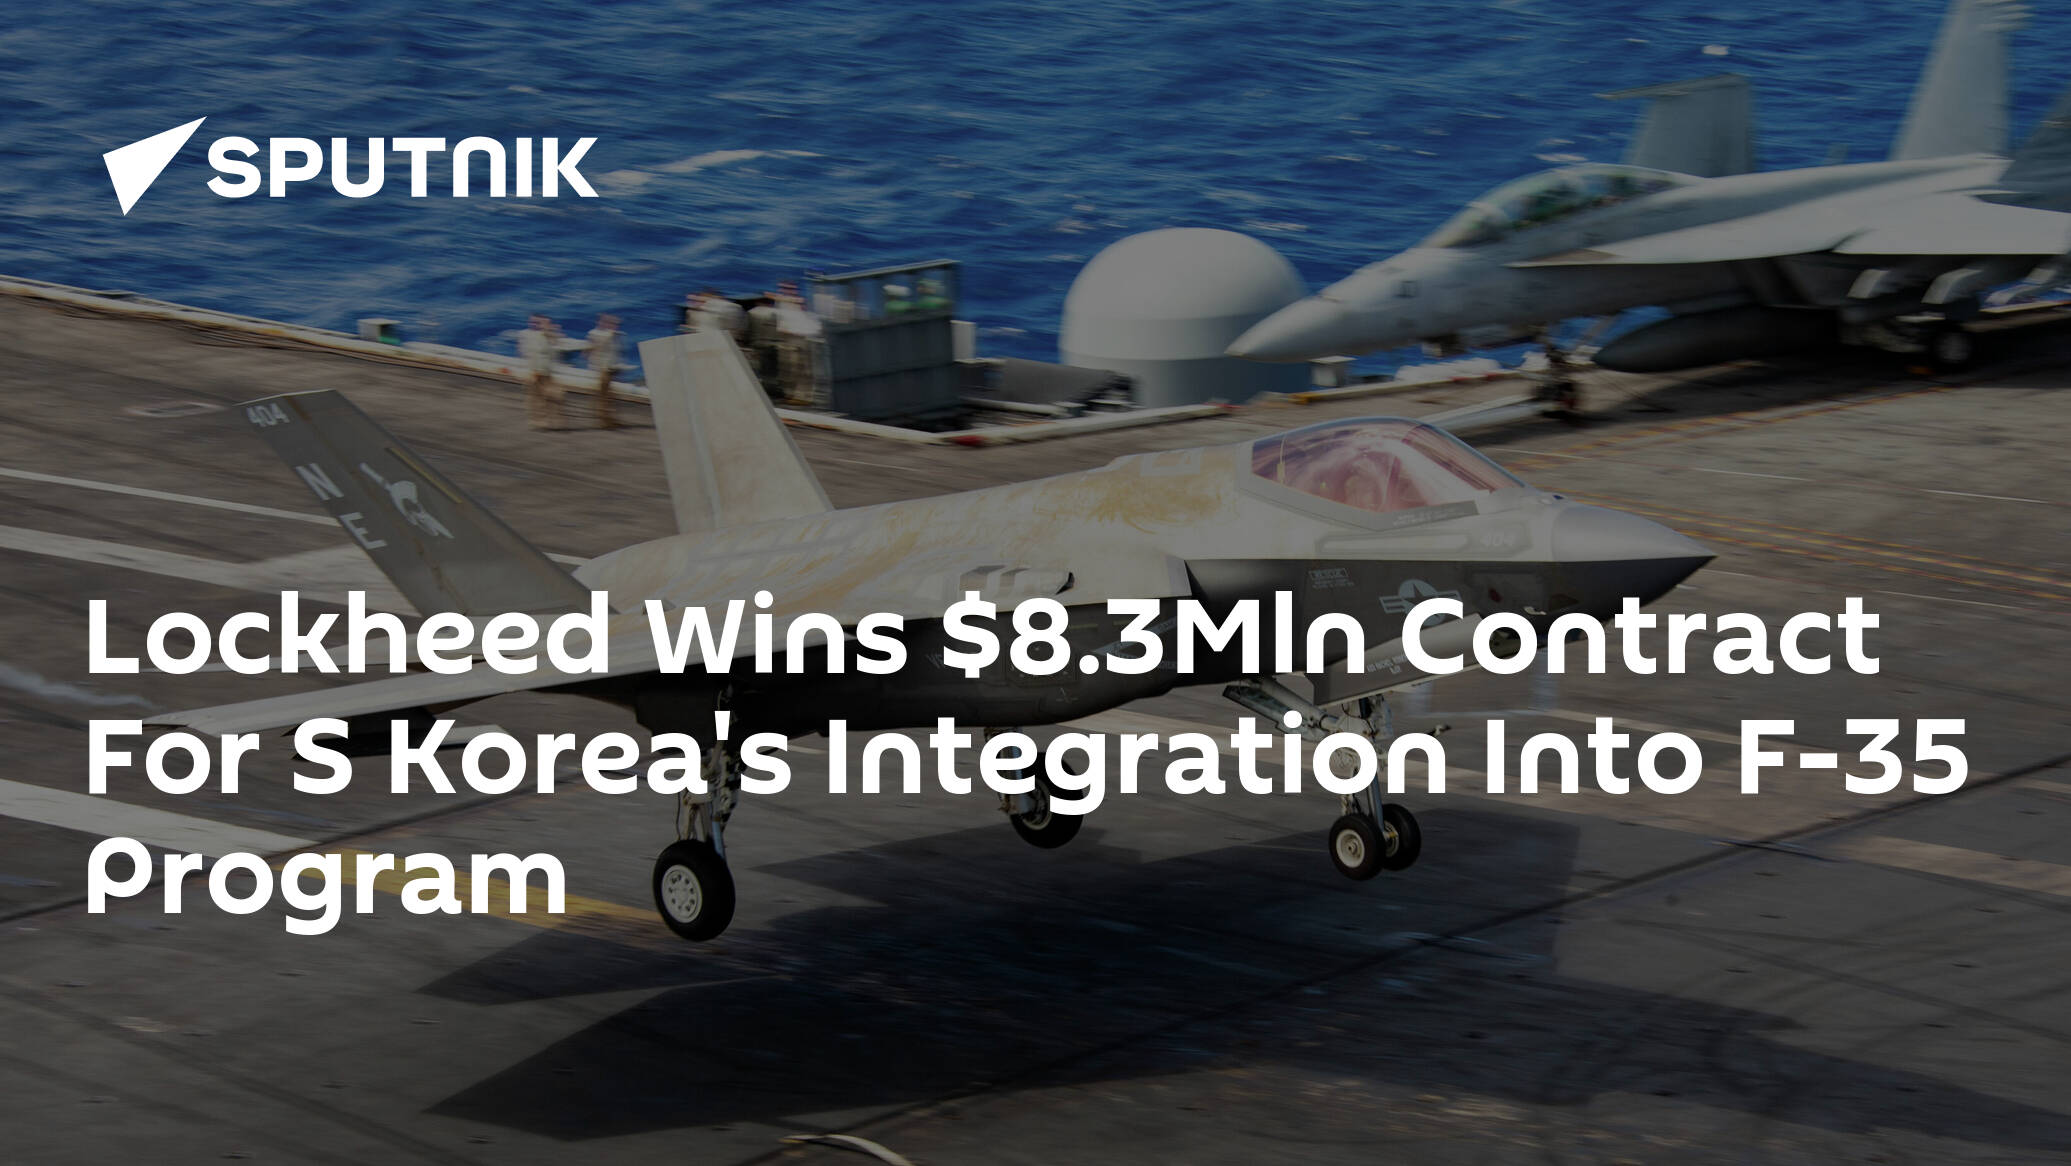 Lockheed Wins .3Mln Contract For S Korea's Integration Into F-35 Program